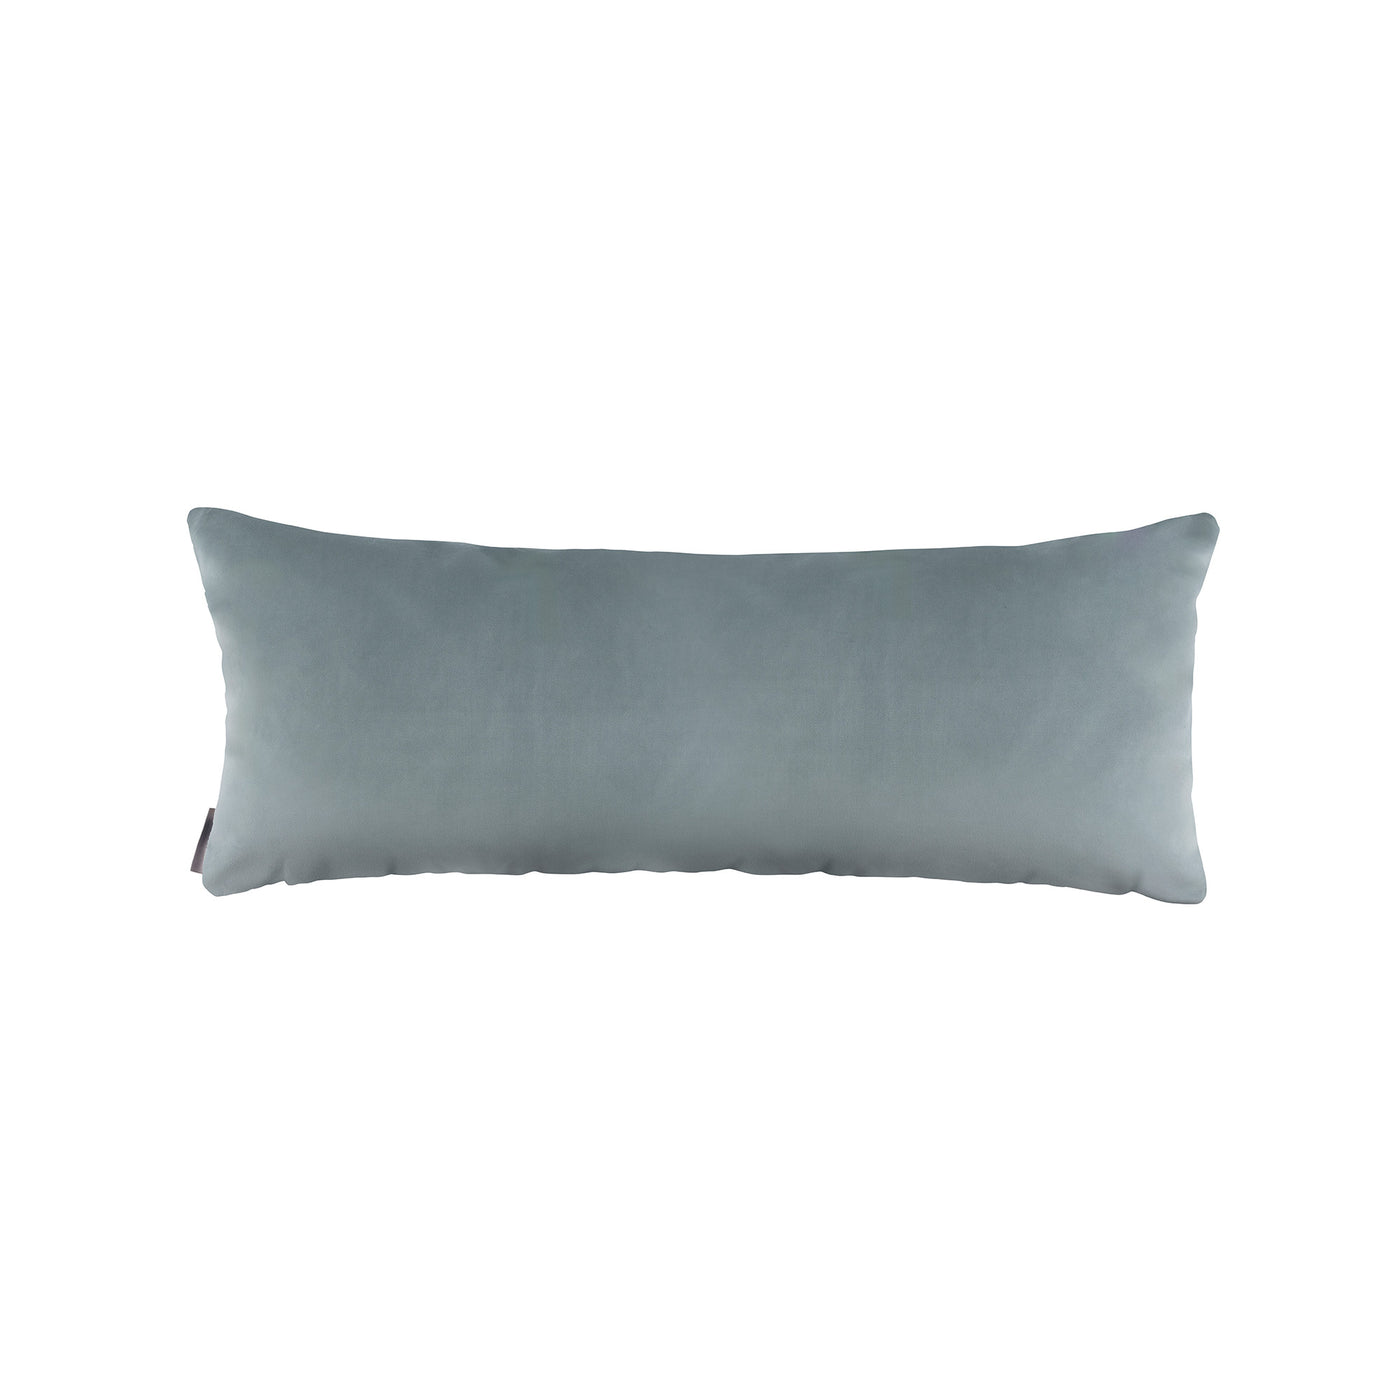 Vivid Mist Long Rectangle Pillow (18x46)